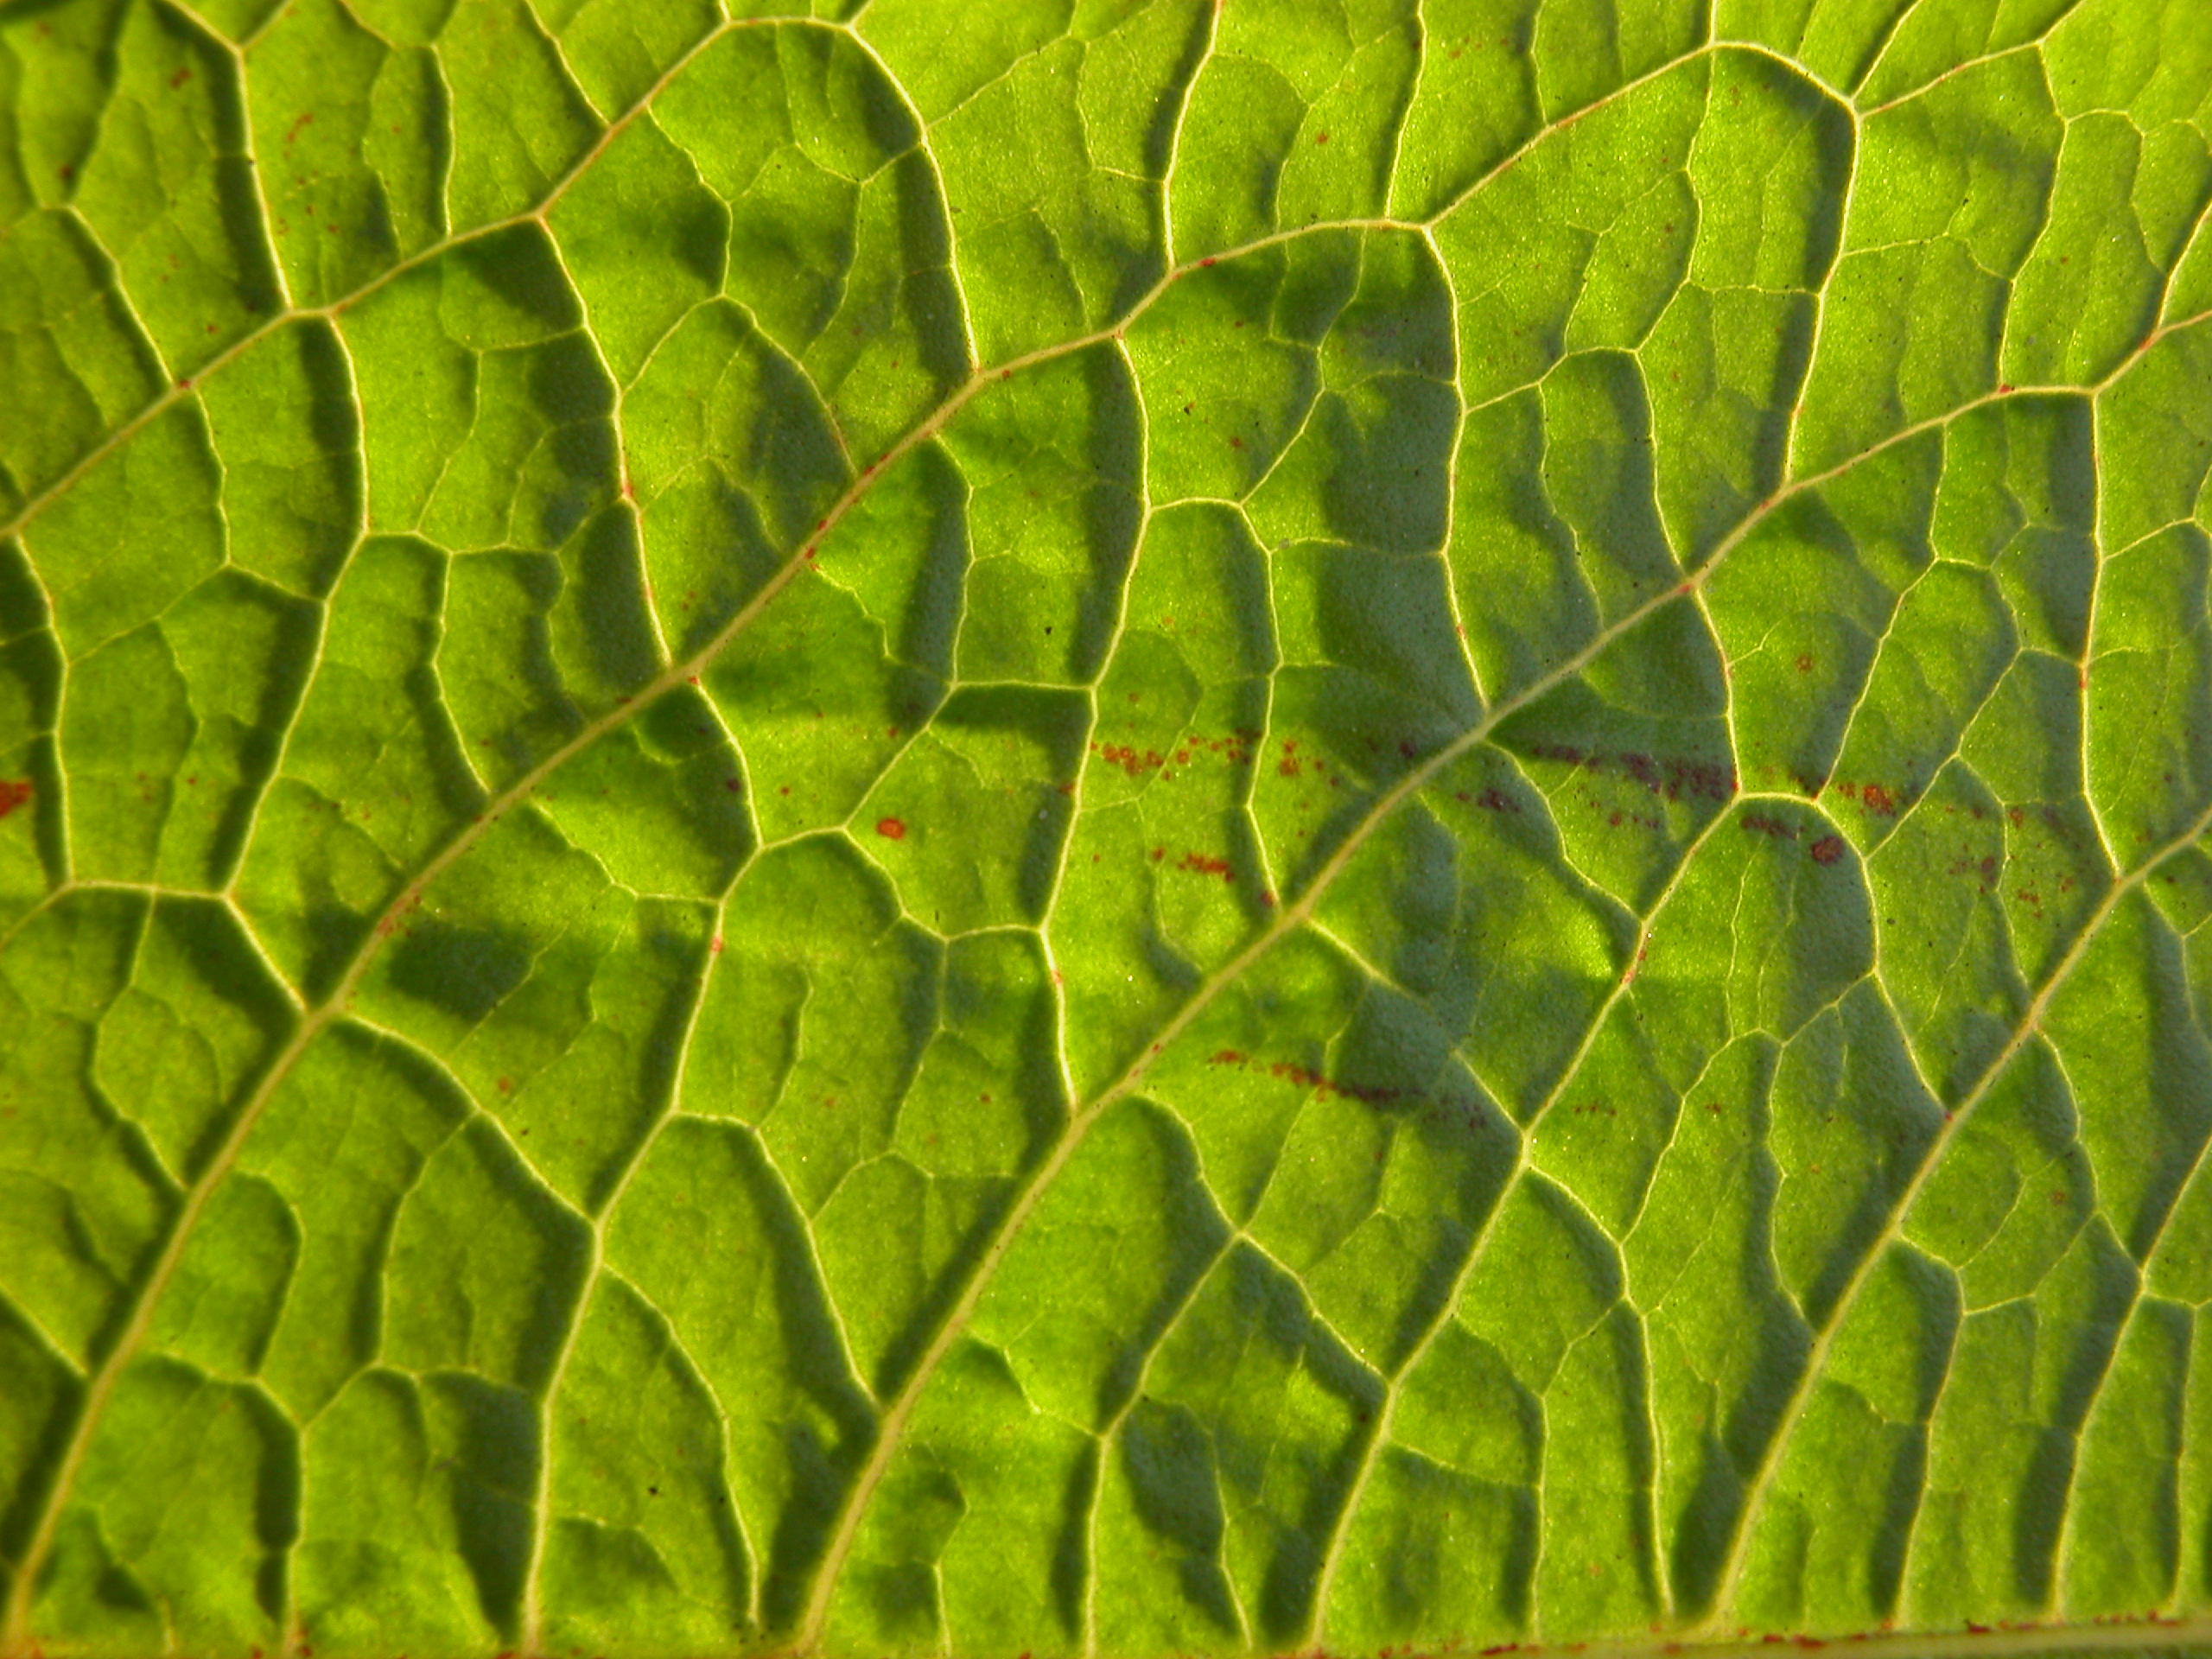 Image*After : textures : nature texture vein veins leaf green